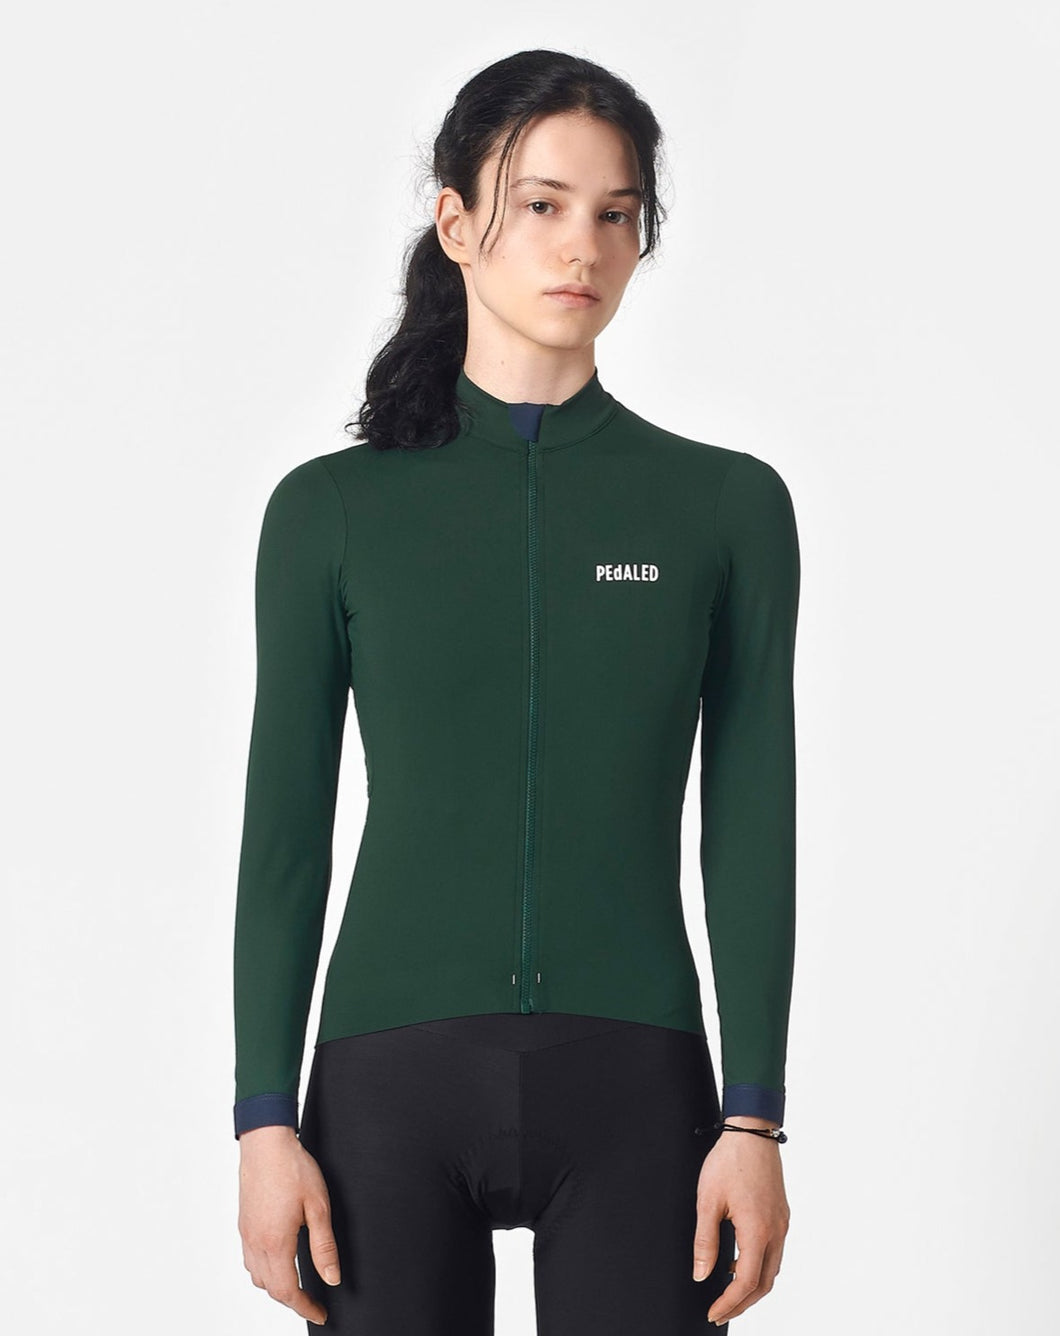 PEdALED Women's Essential Long Sleeve Jersey - Dark Green